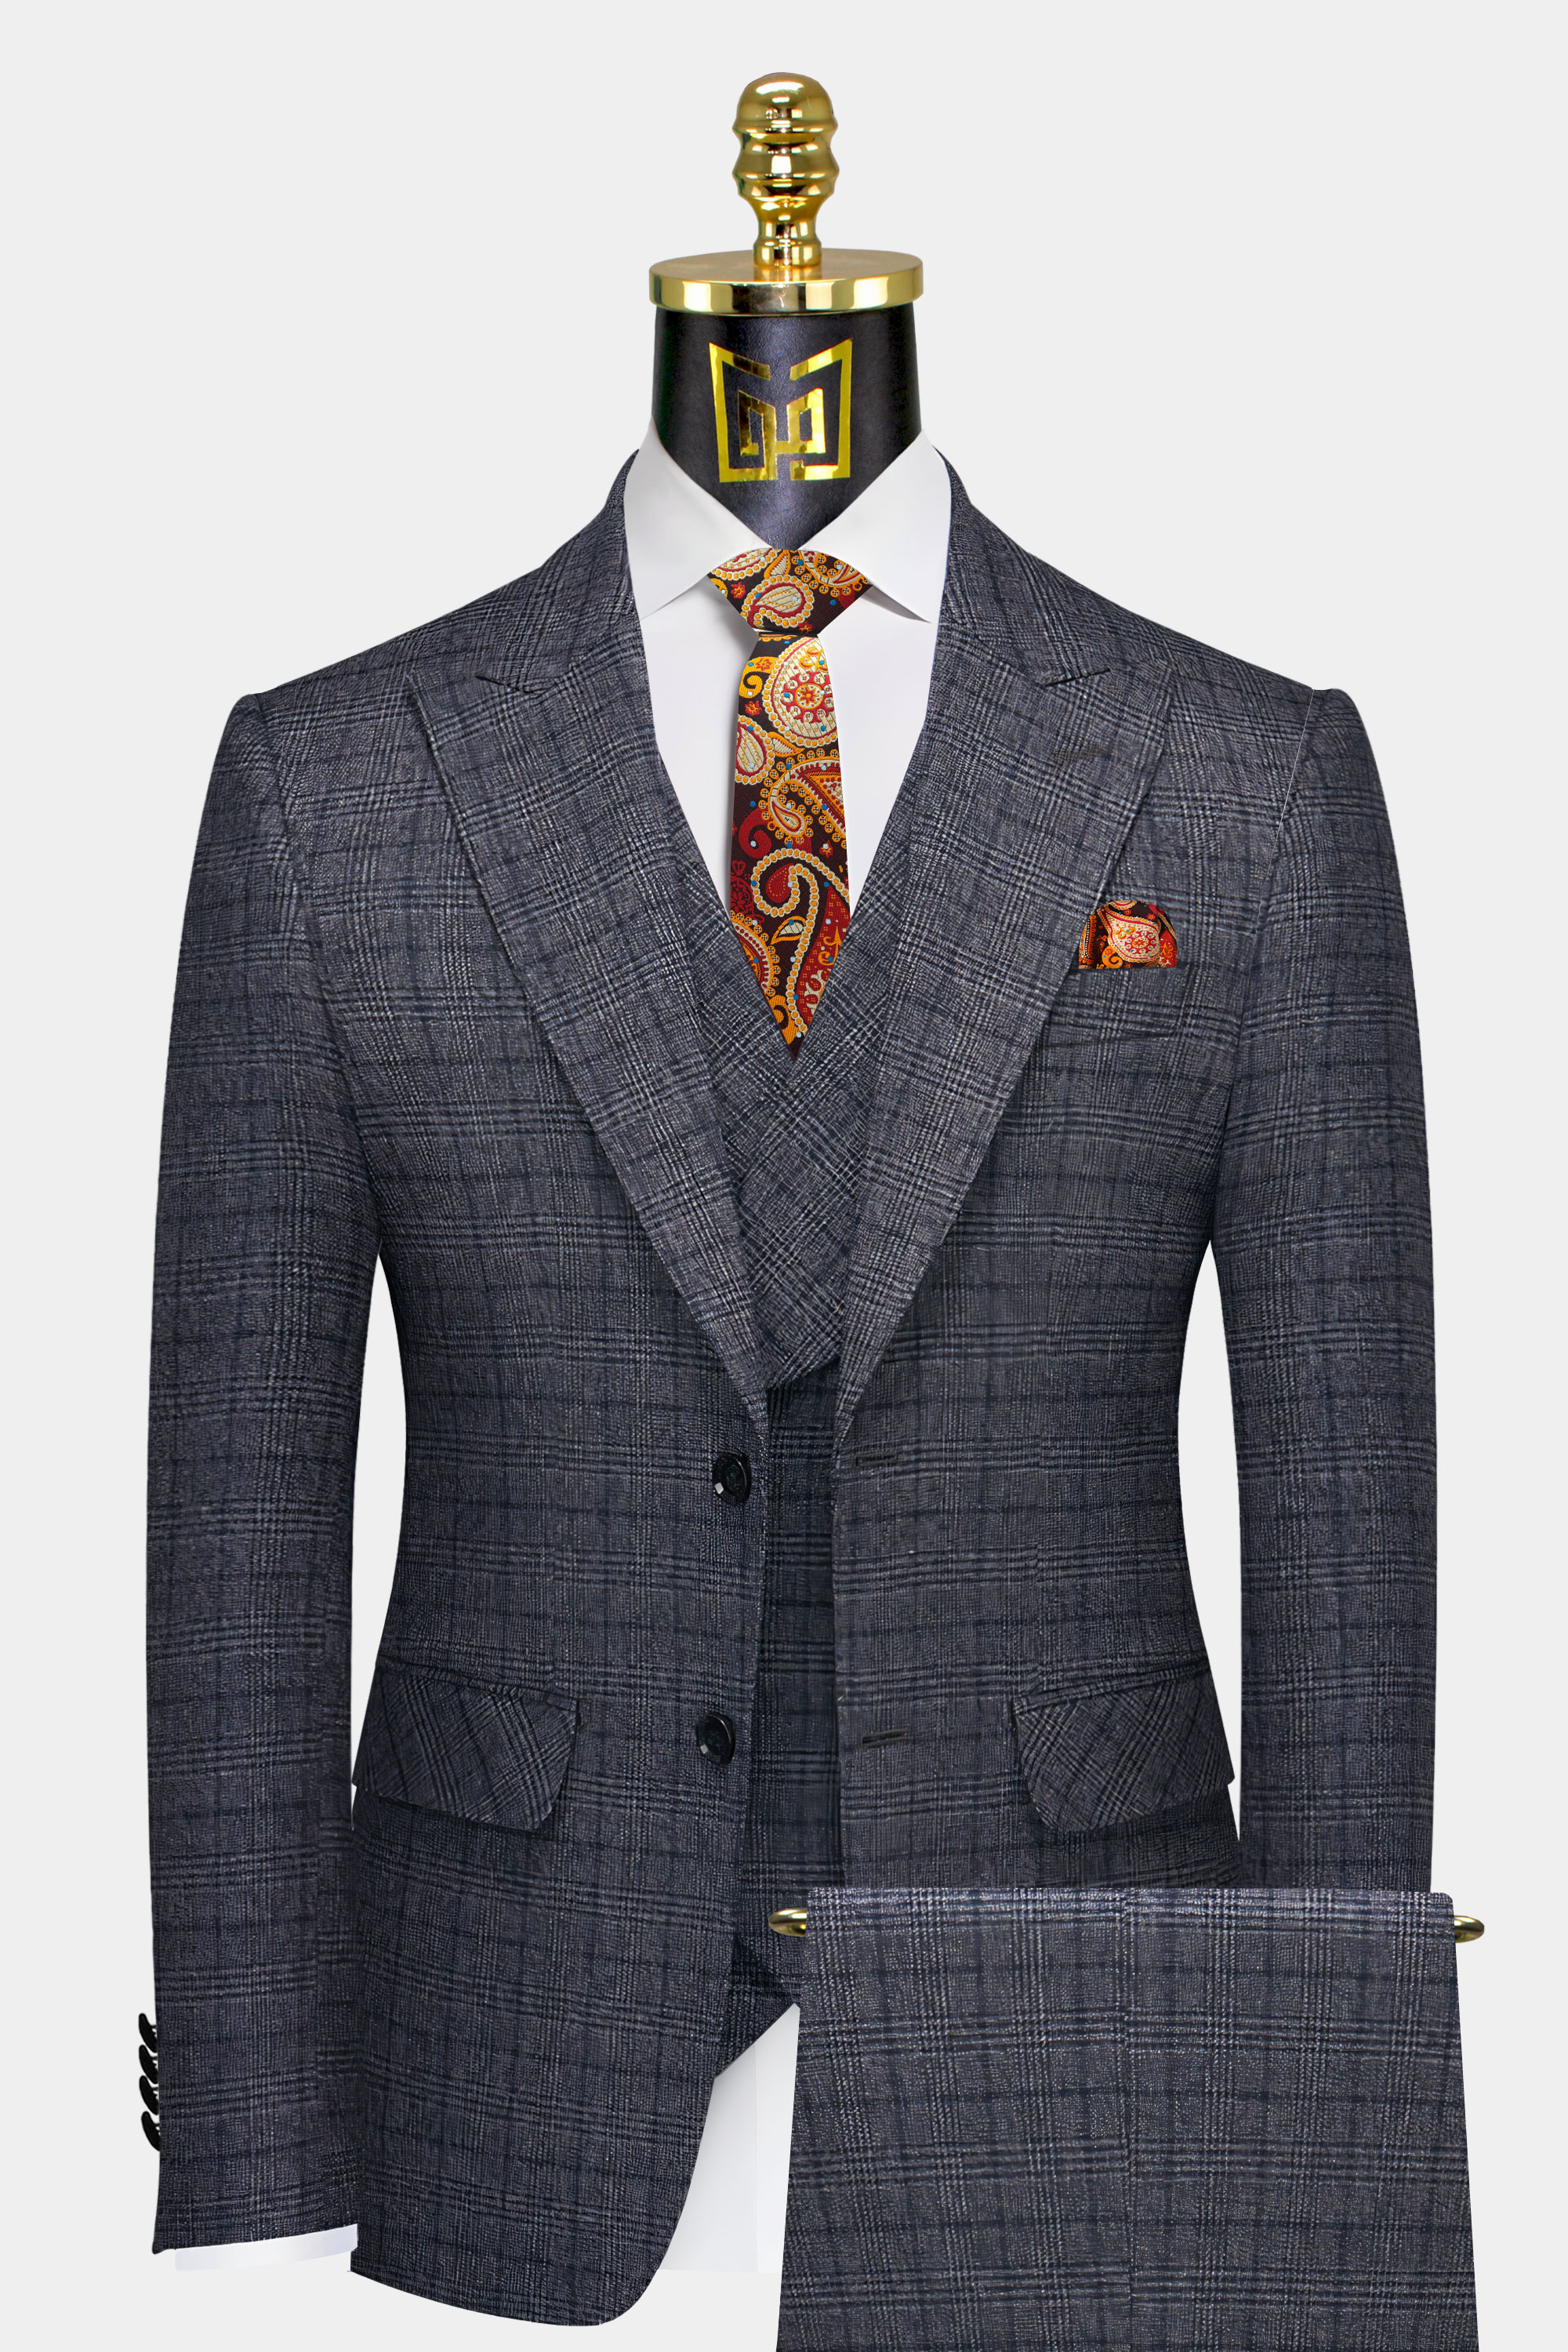 Luxury Plaid Suits Men Formal Grooms Wedding Tuxedo Double Breasted Coat Pant Design Latest Fashion